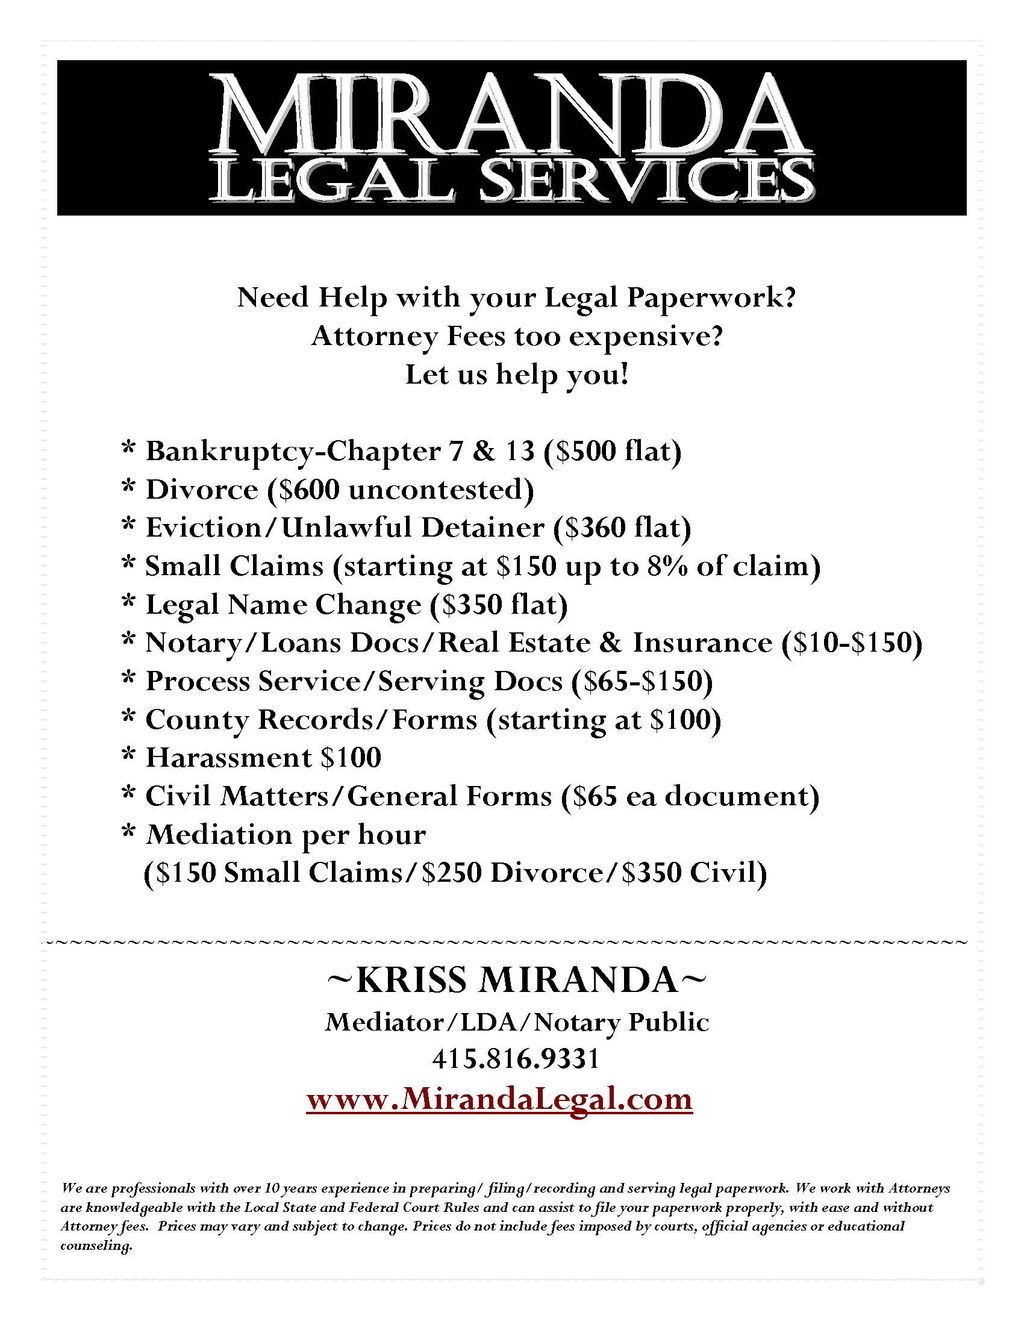 Miranda Legal Services